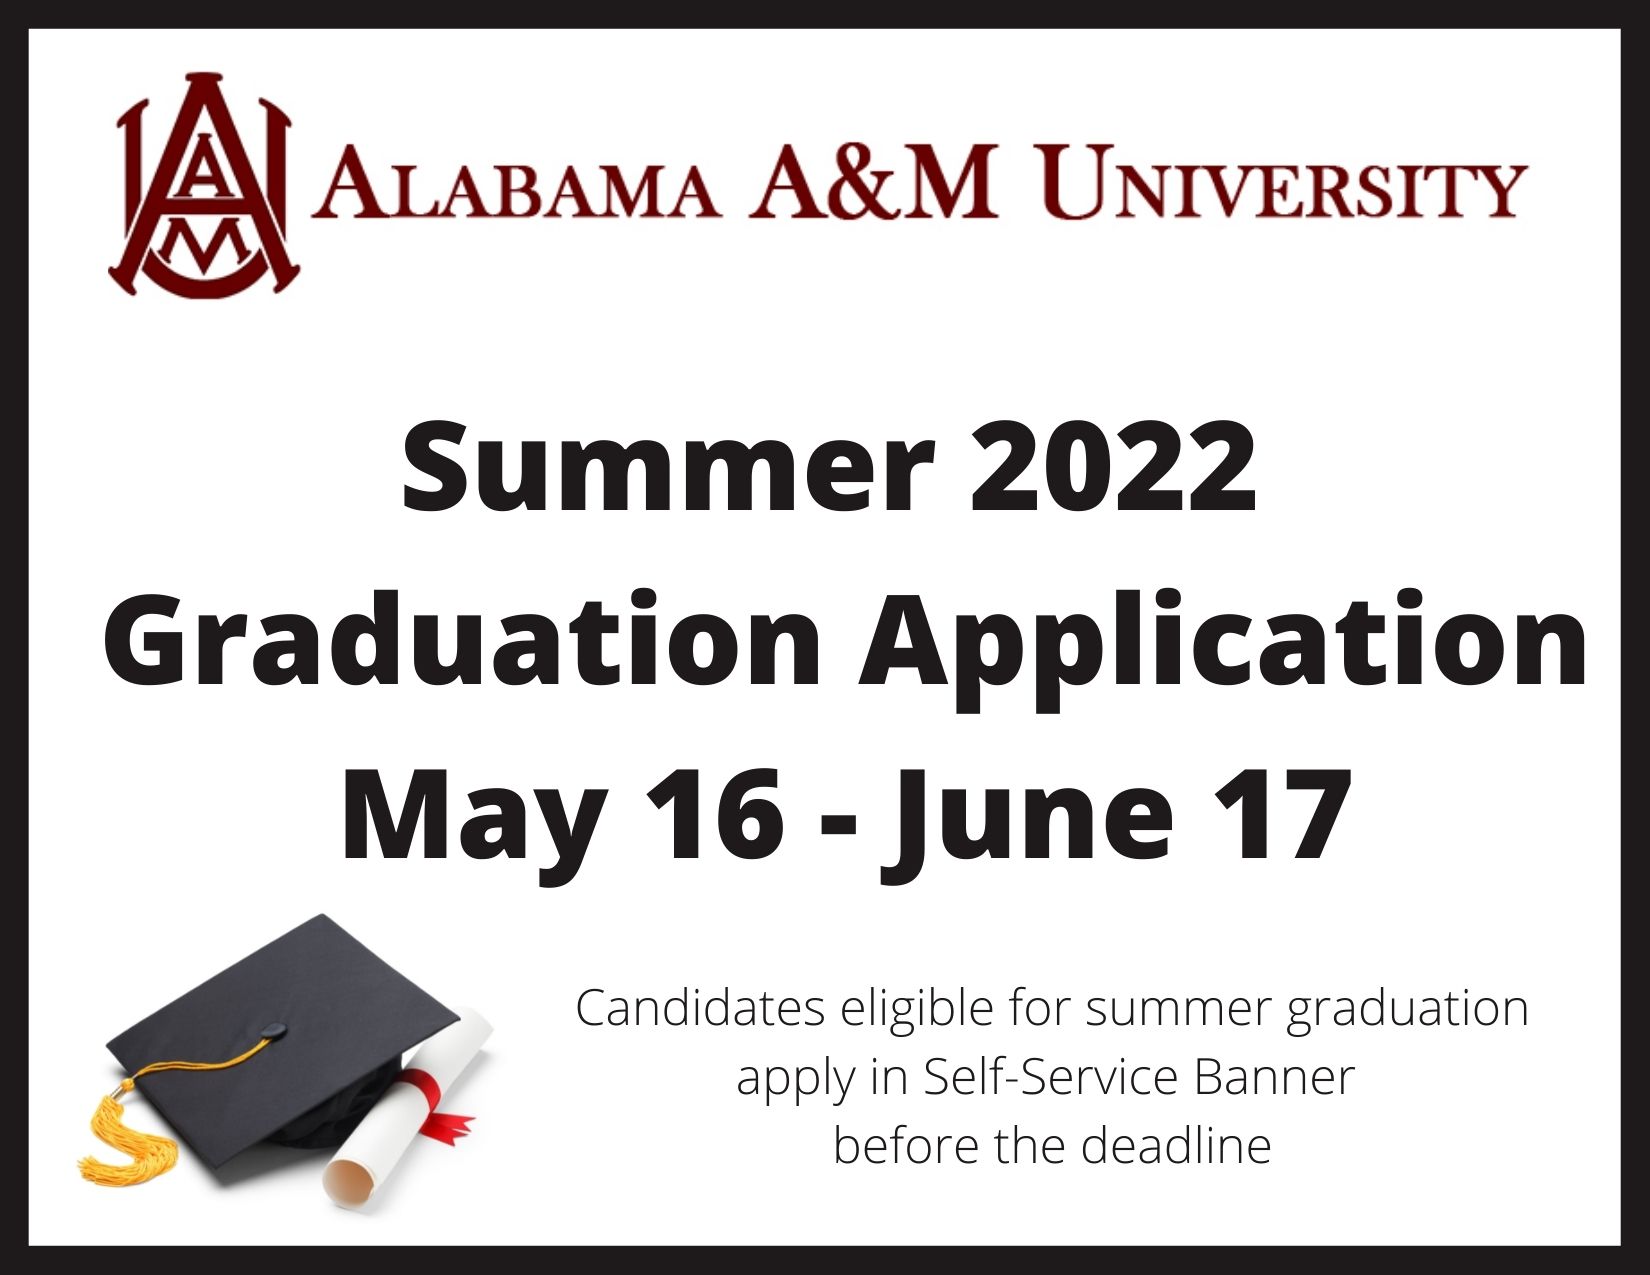 Summer 2022 Graduation Application Dates